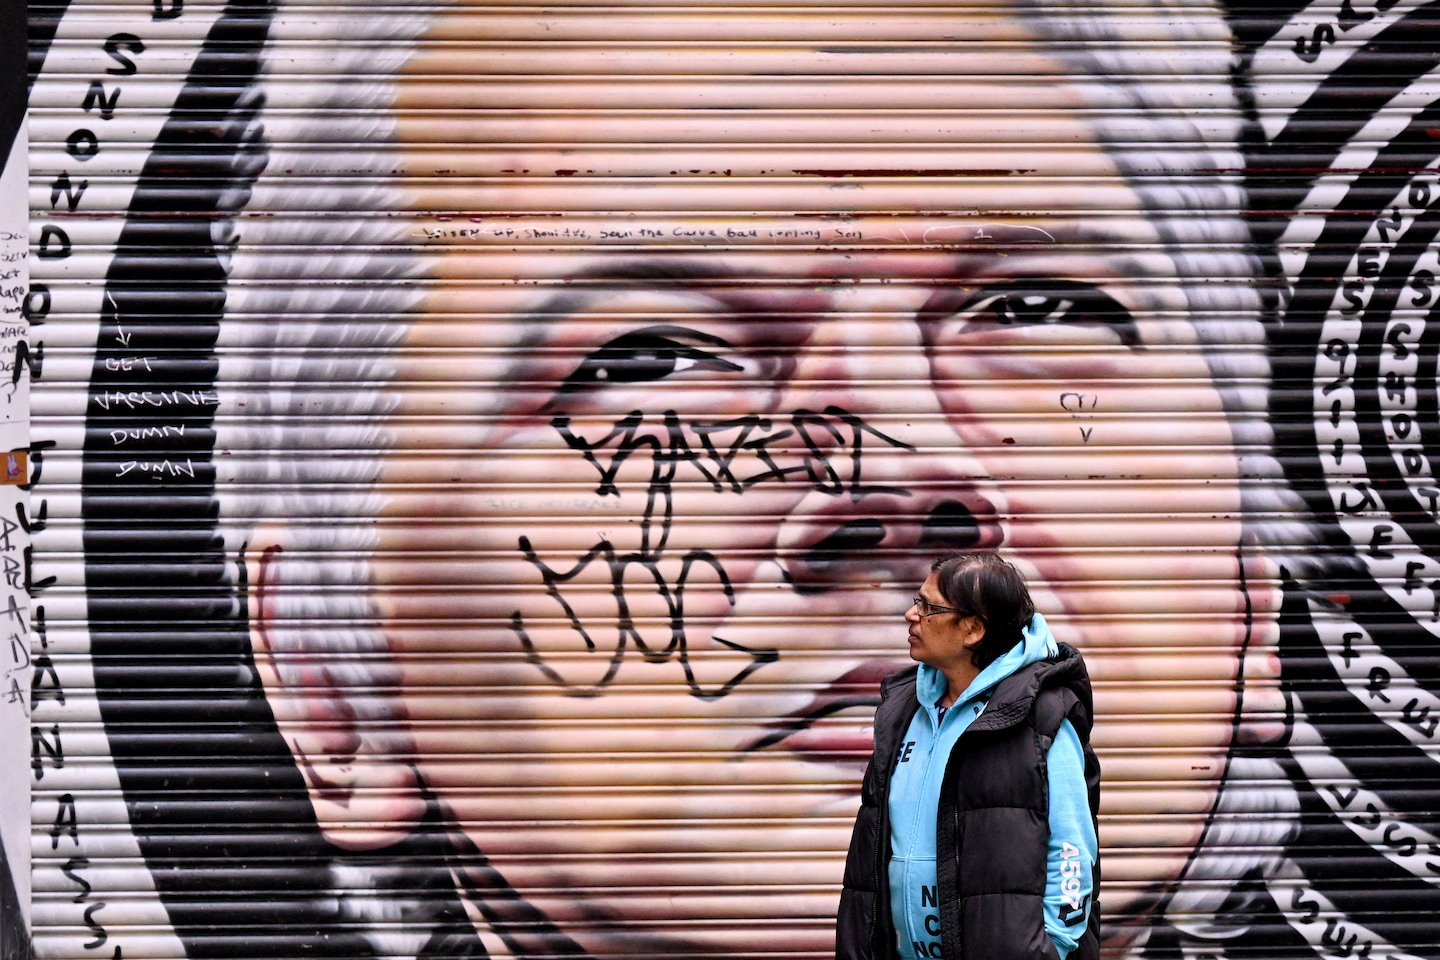 Julian Assange arrives home in Australia amid warnings about press freedom